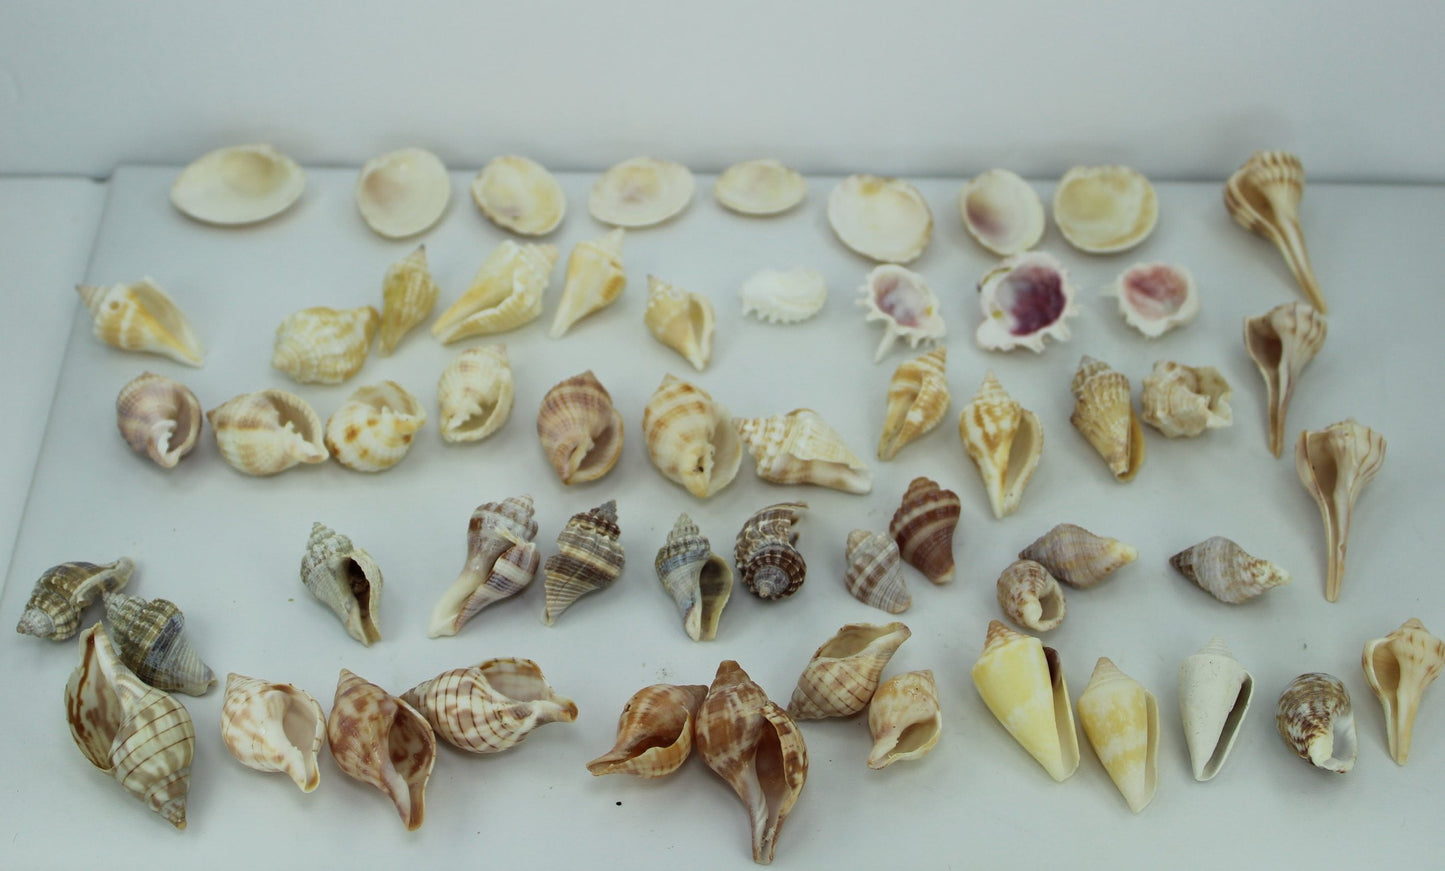 Florida Natural Shells 57 Mini Small Tulips Calico Whelks Wedding Jewelry Shell Art hand picked